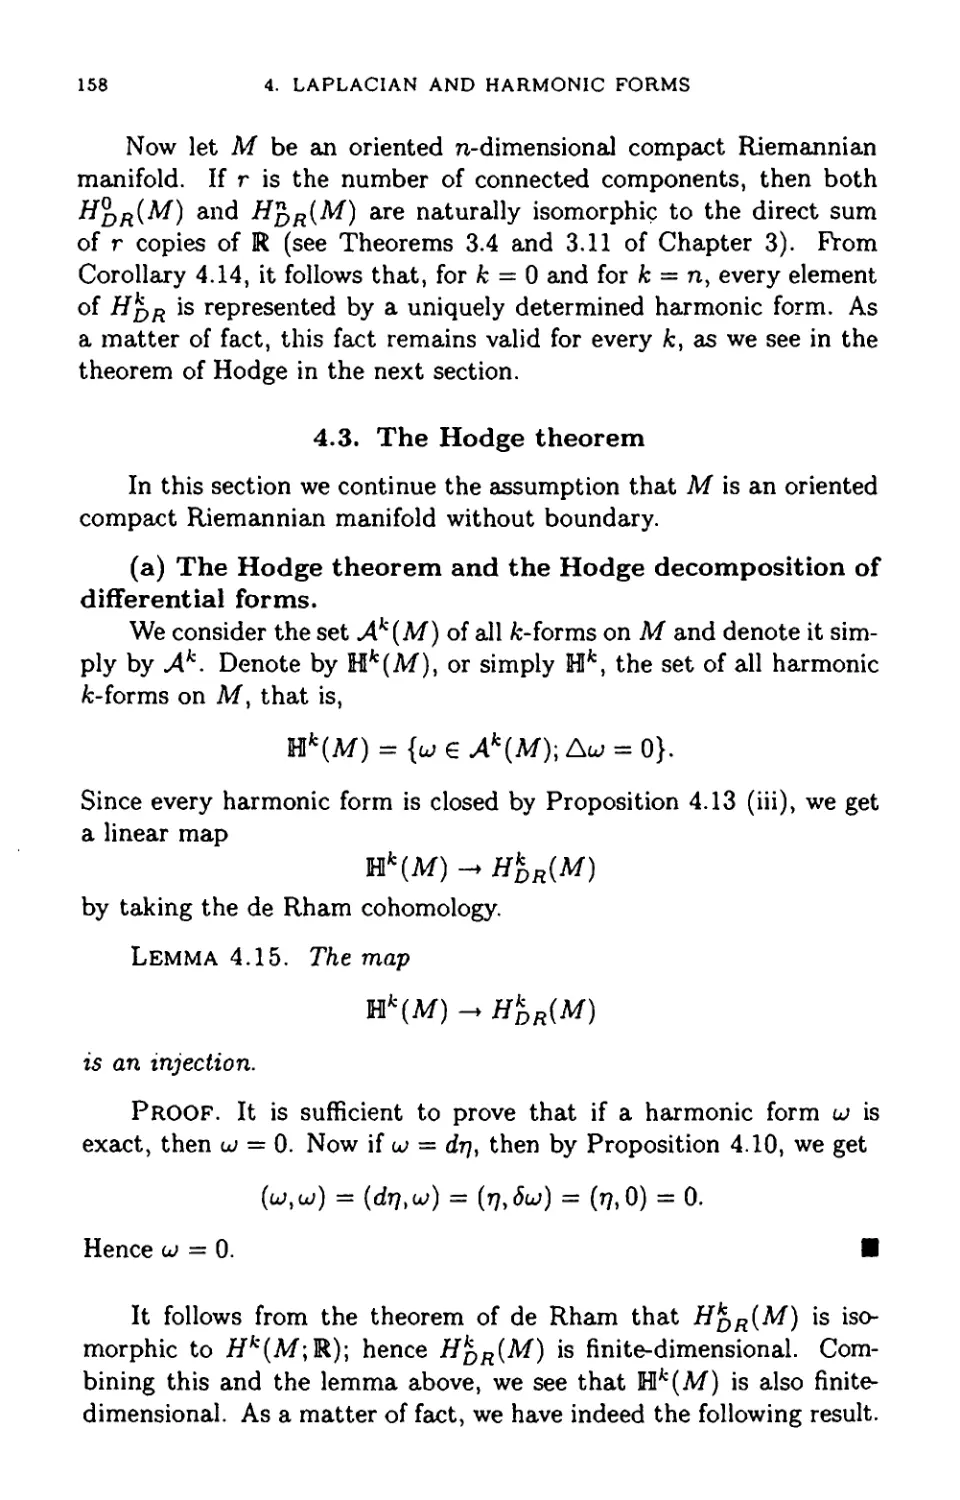 4.3 The Hodge theorem